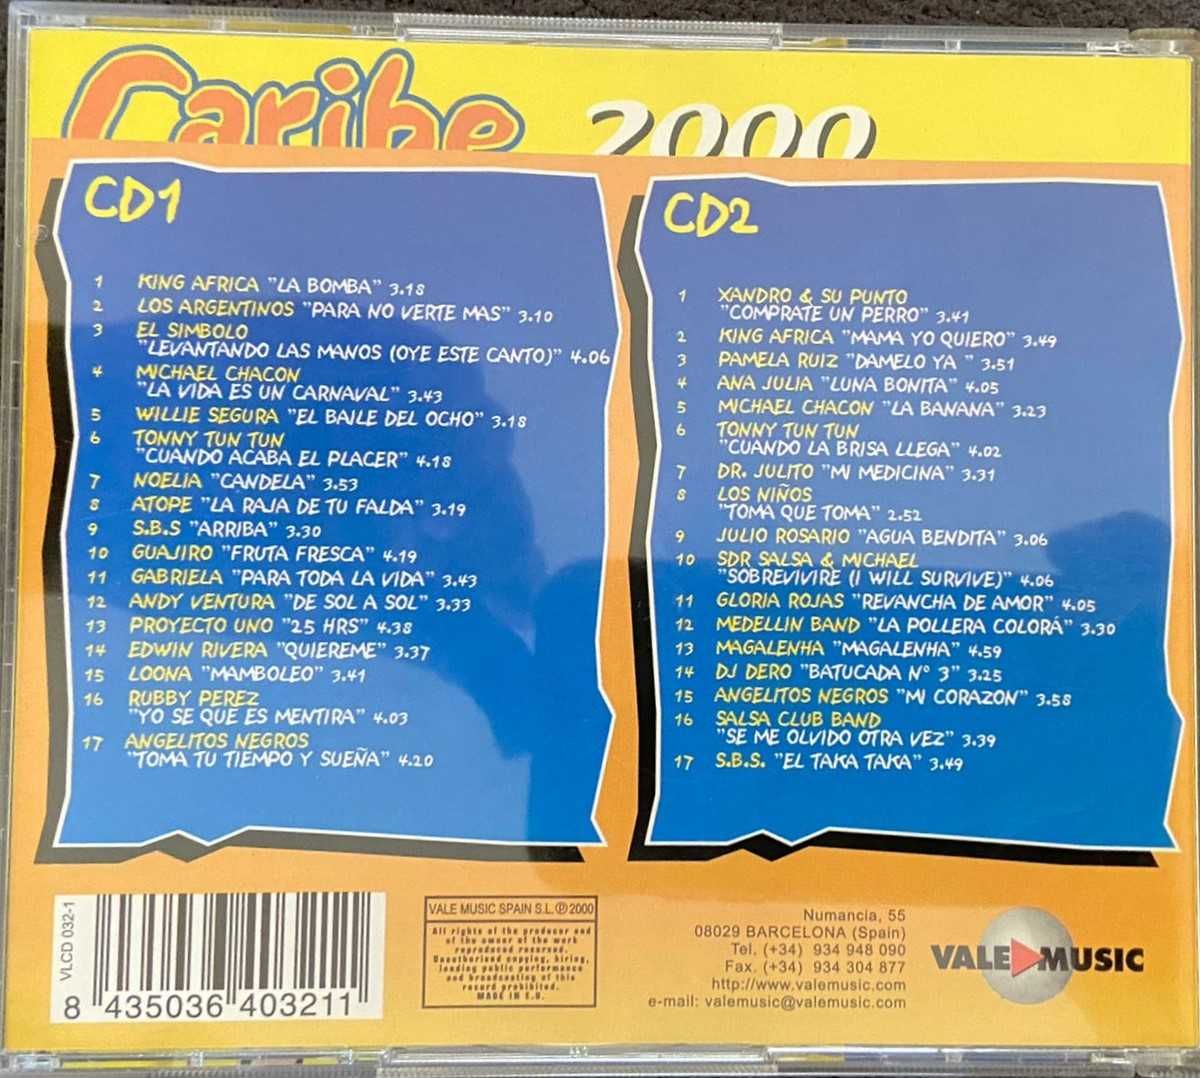 4 CDs Caribe 2000